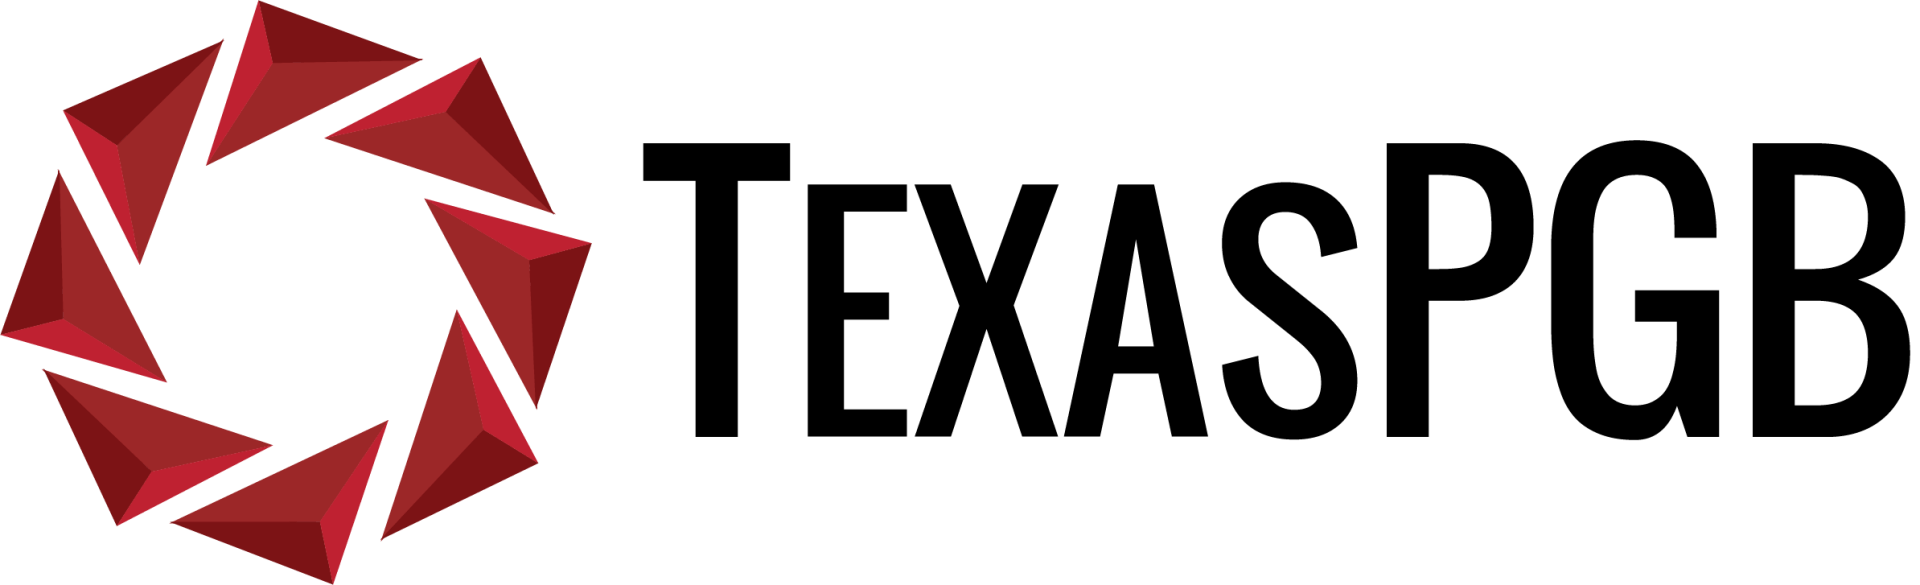 TexasPGB logo artwork